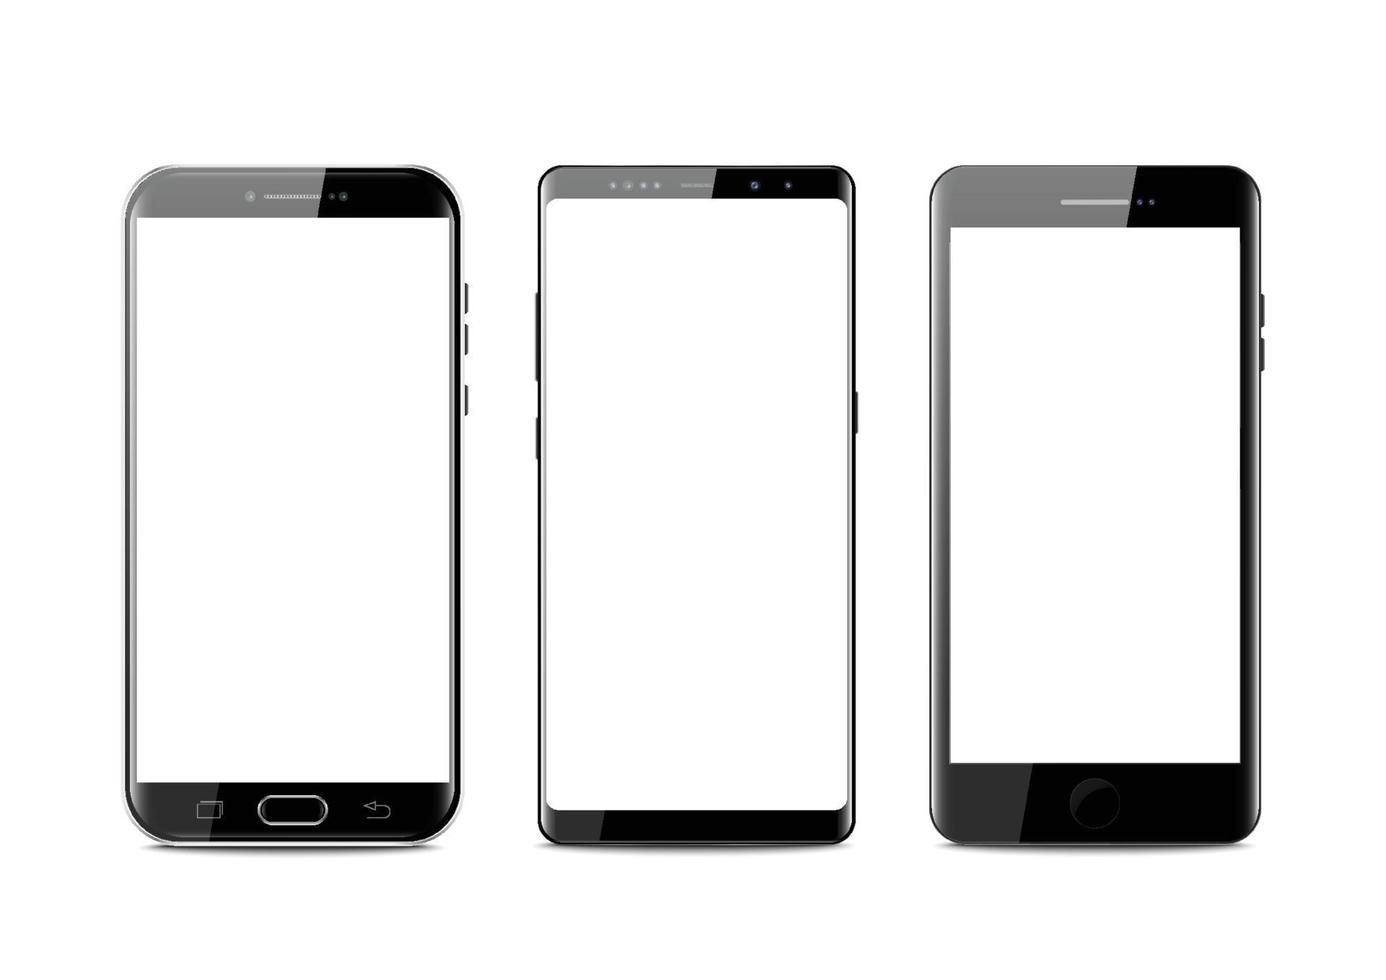 novo estilo moderno de smartphone preto móvel realista. smartphone de vetor isolado no fundo branco. conjunto de maquetes vetoriais.